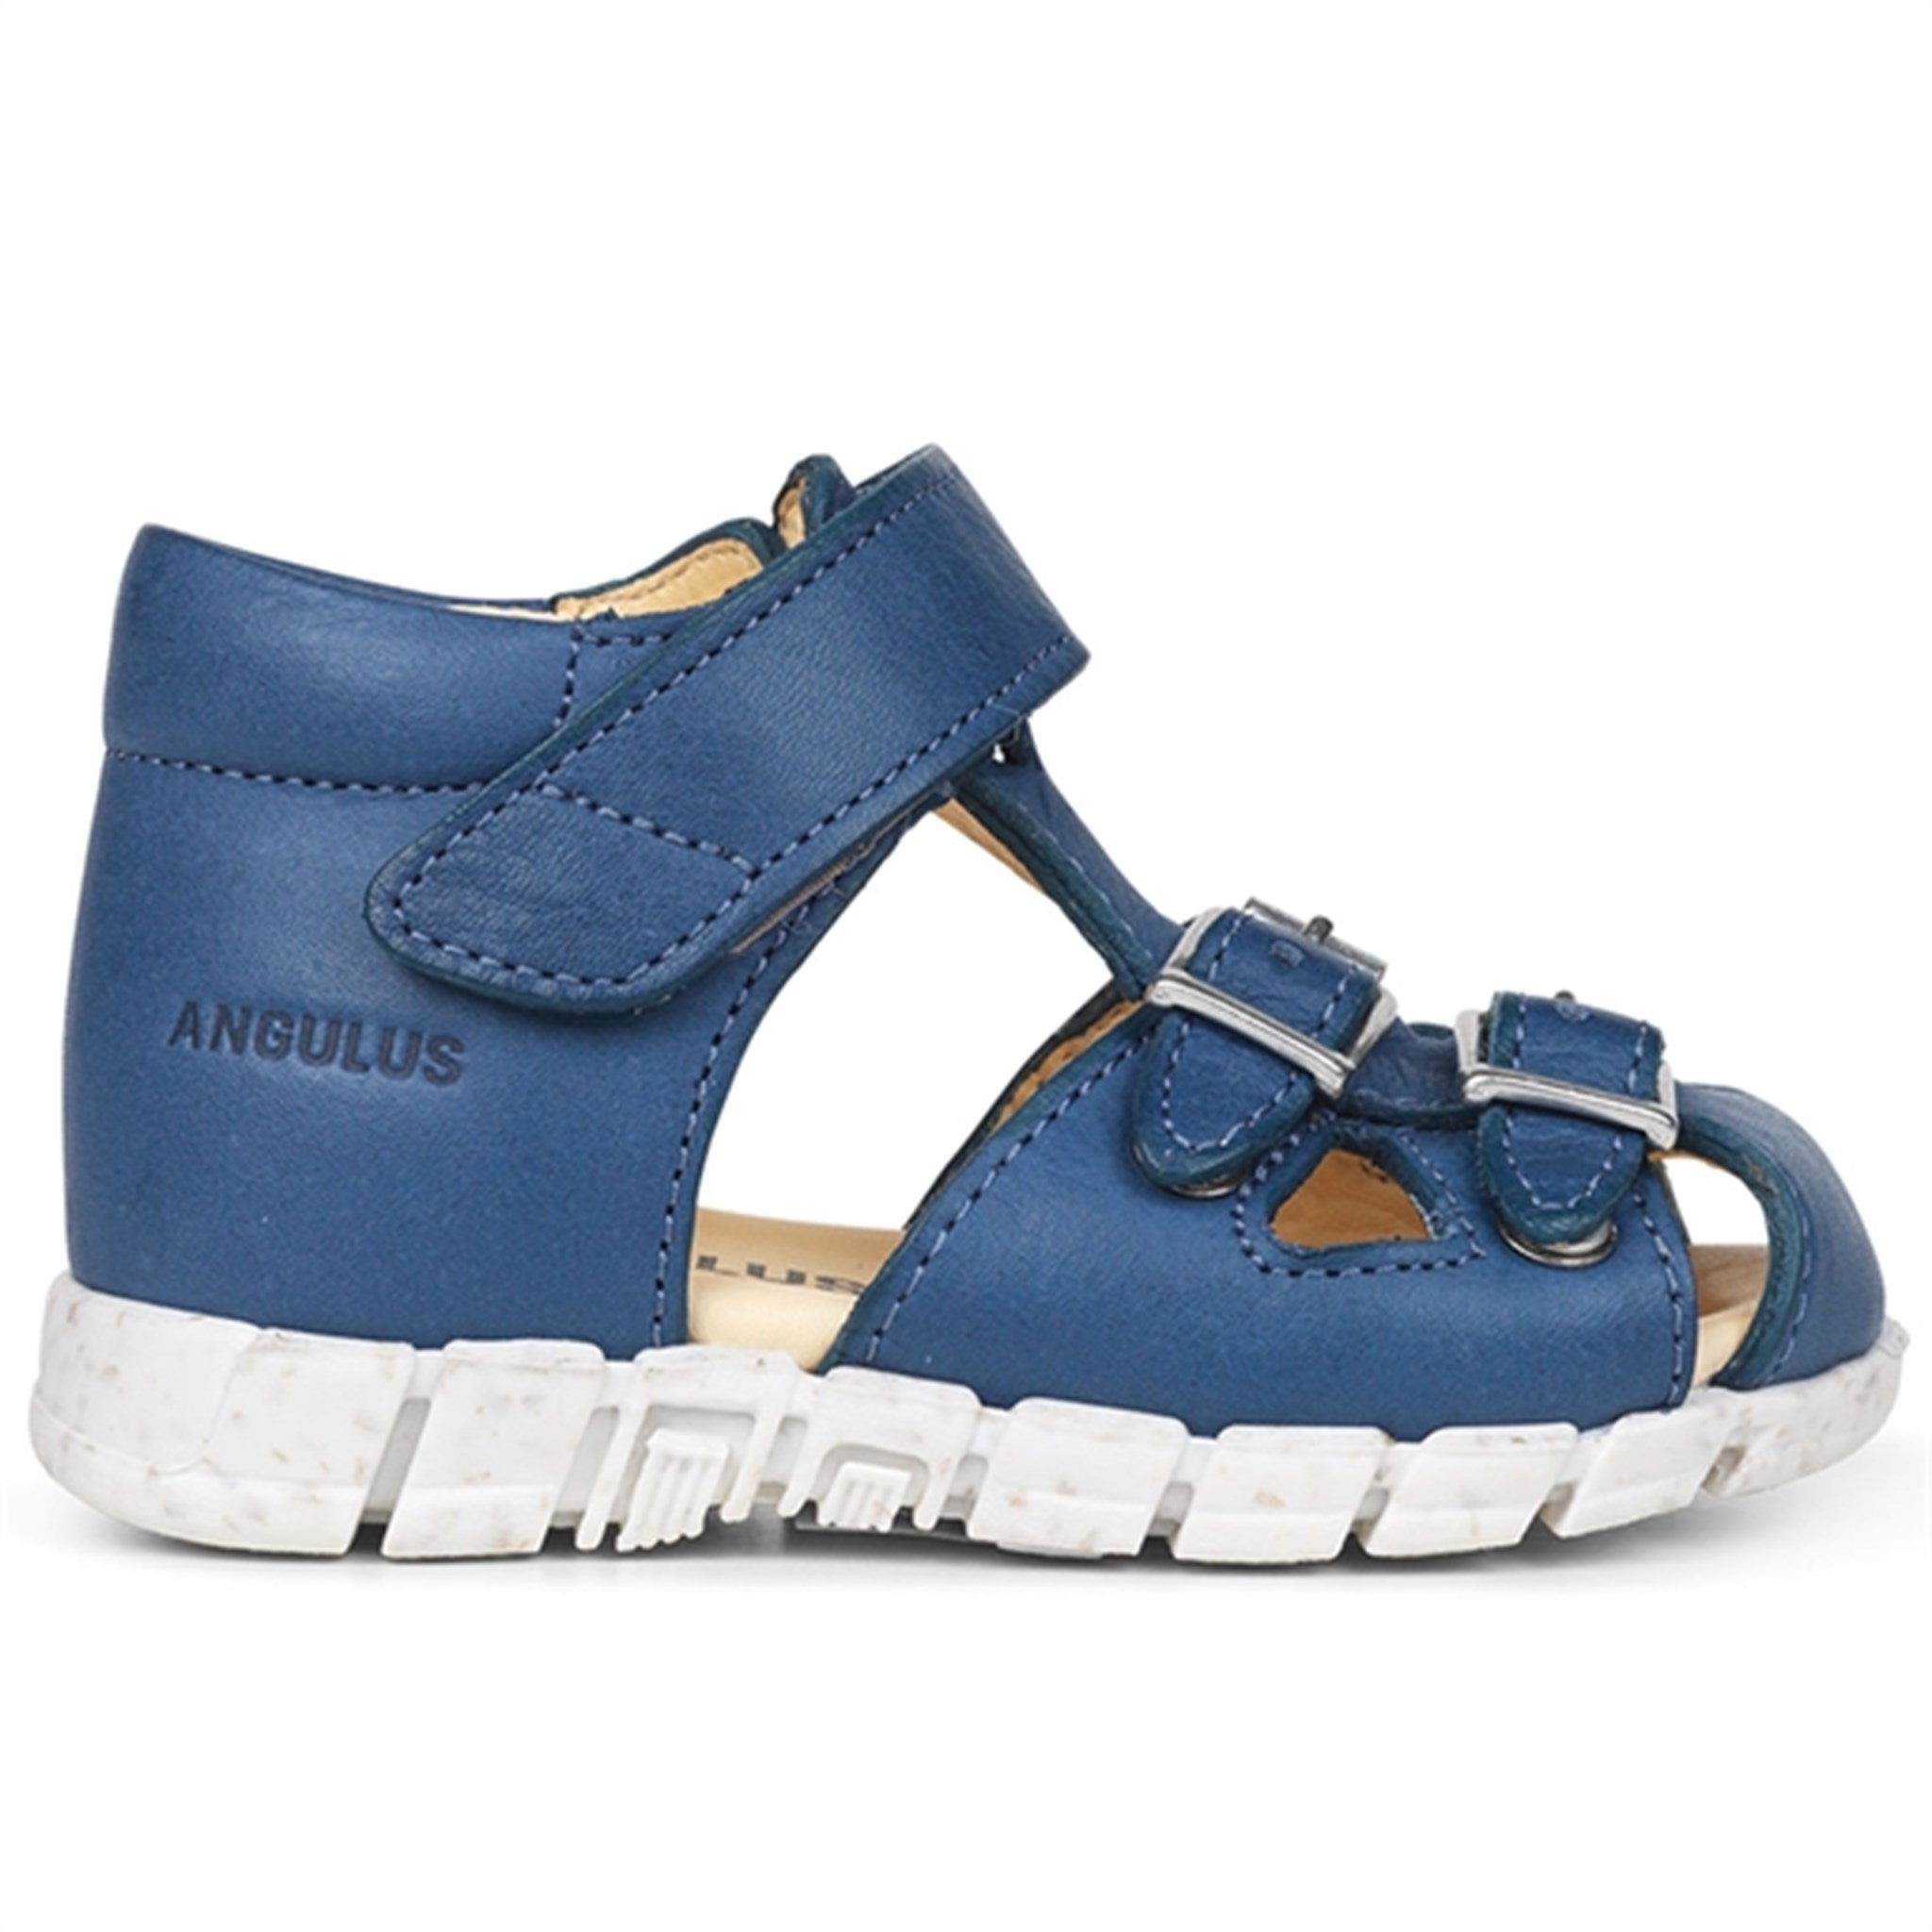 Angulus Starter Sandal w. Buckles Blue 5213-301-1413 2